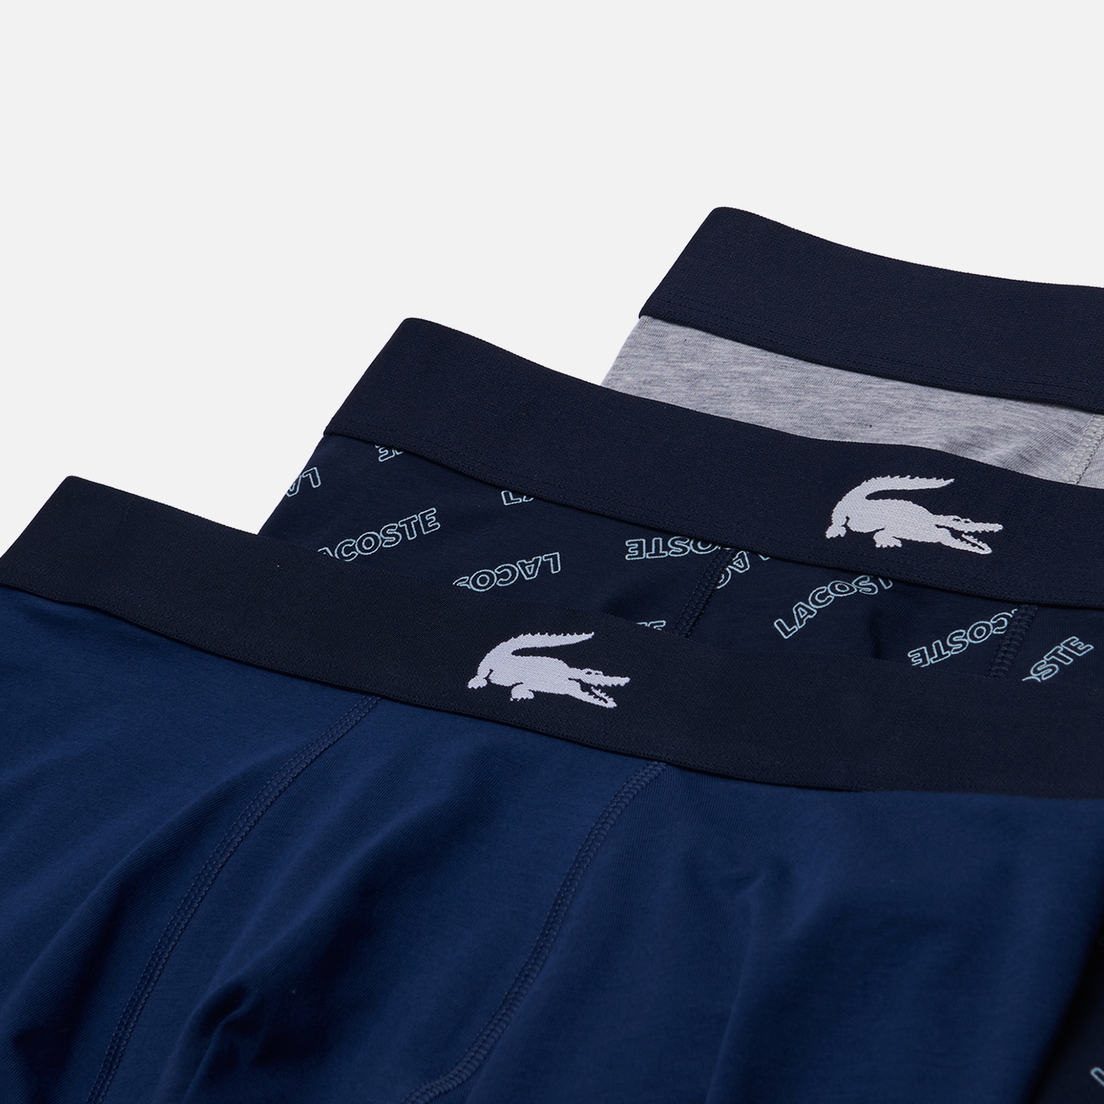 Lacoste Underwear Комплект мужских трусов 3-Pack Trunk Casual